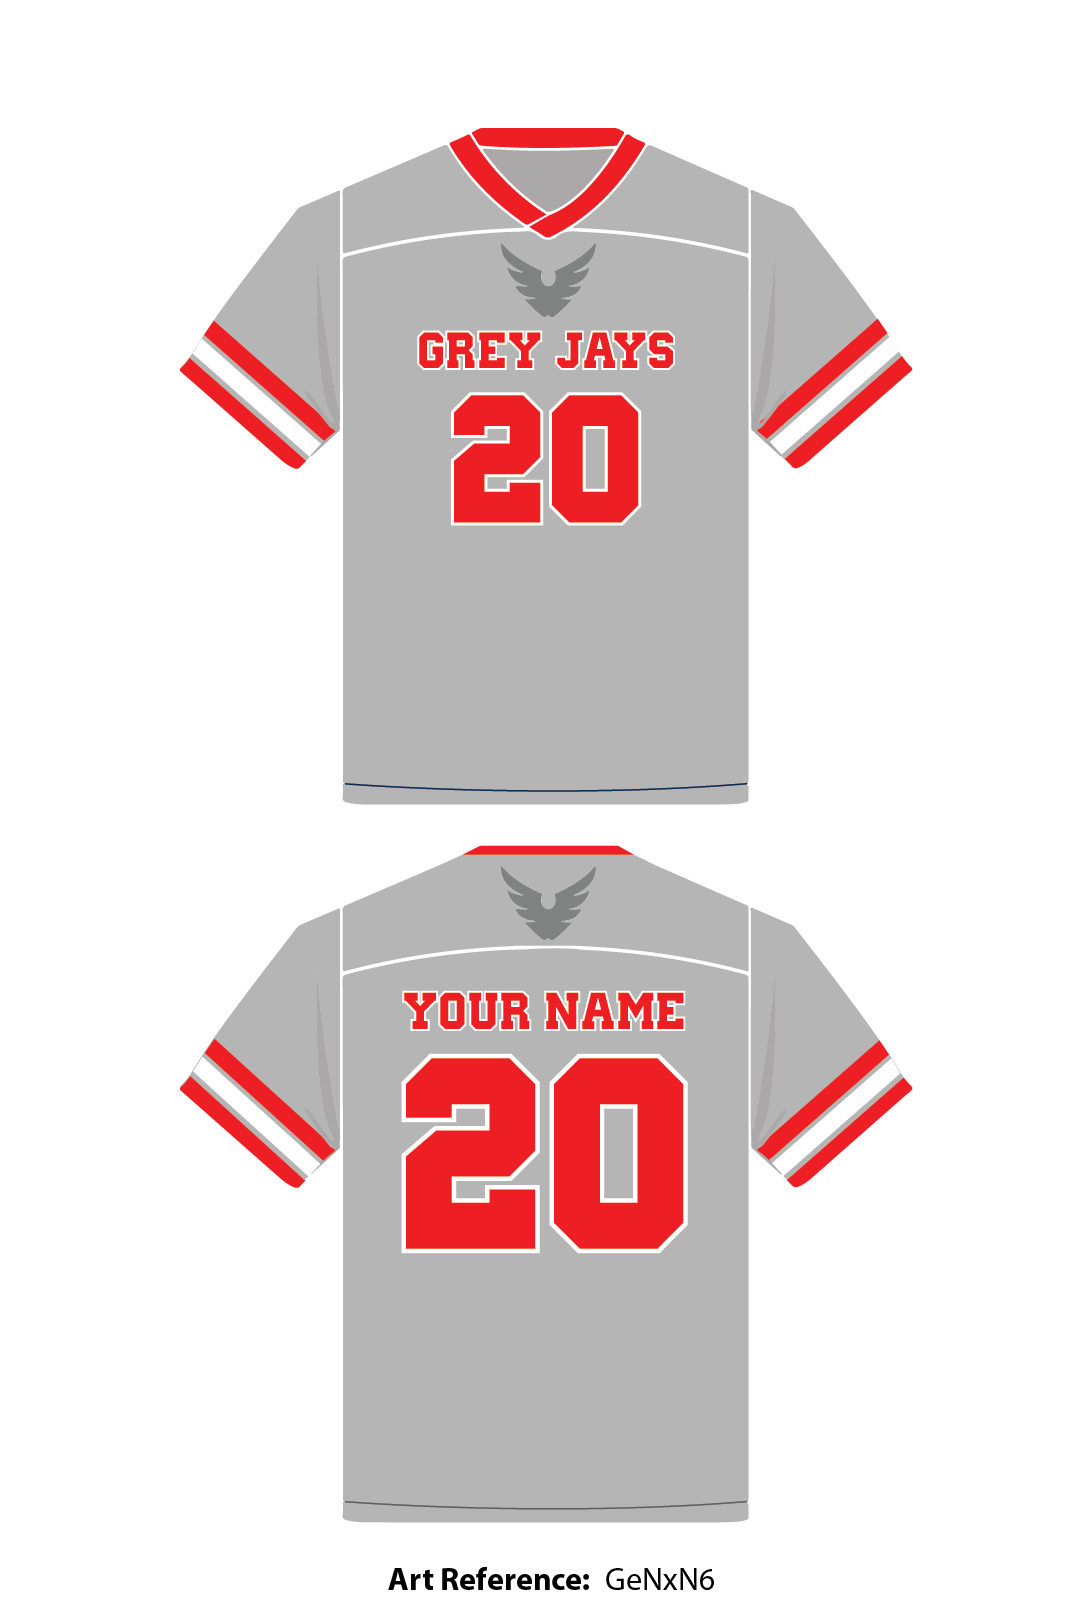 grey jays jersey